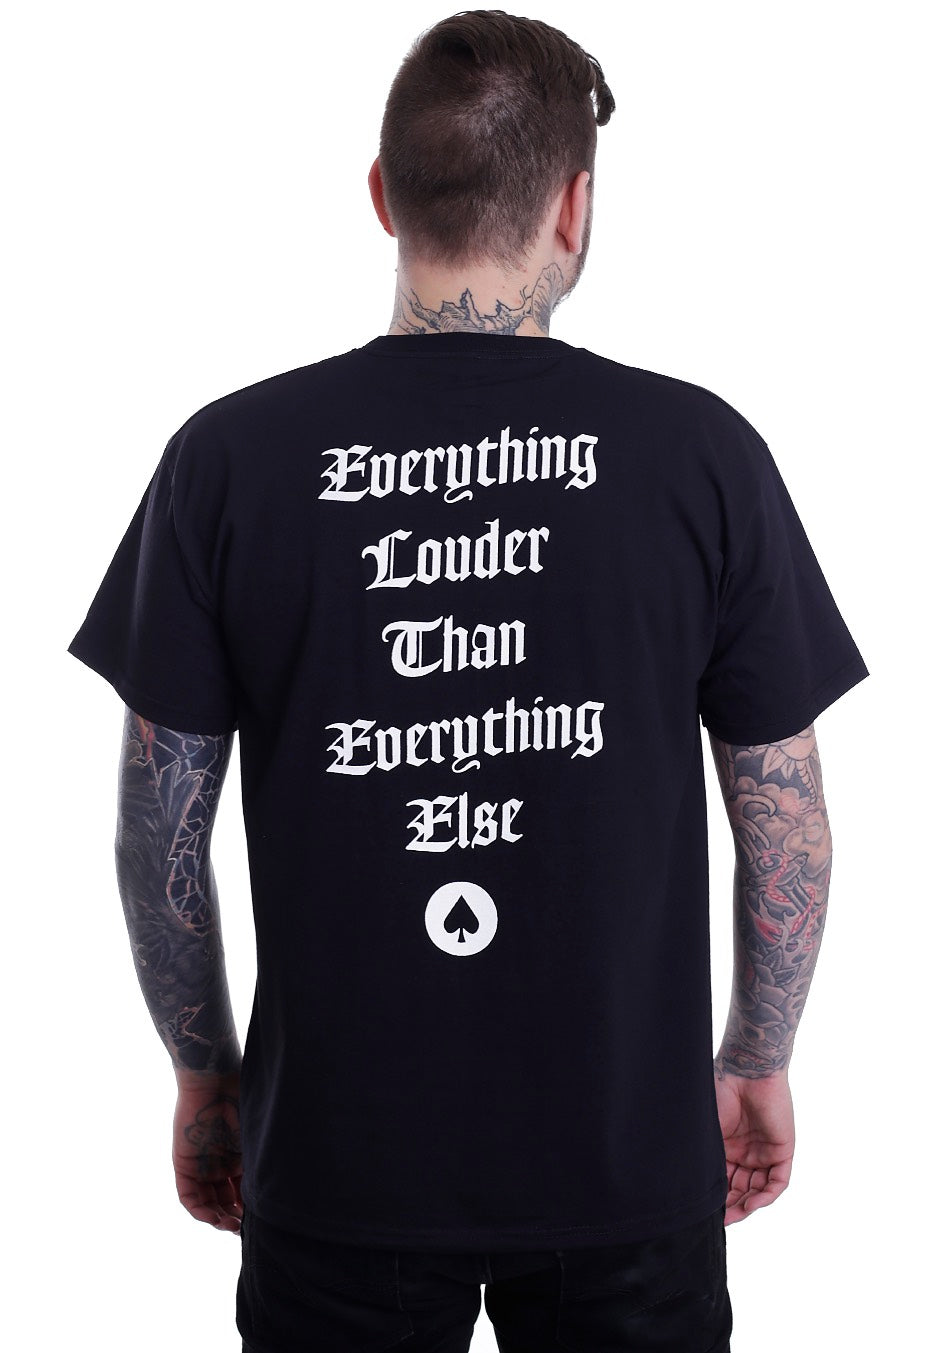 Motörhead - England - T-Shirt | Men-Image